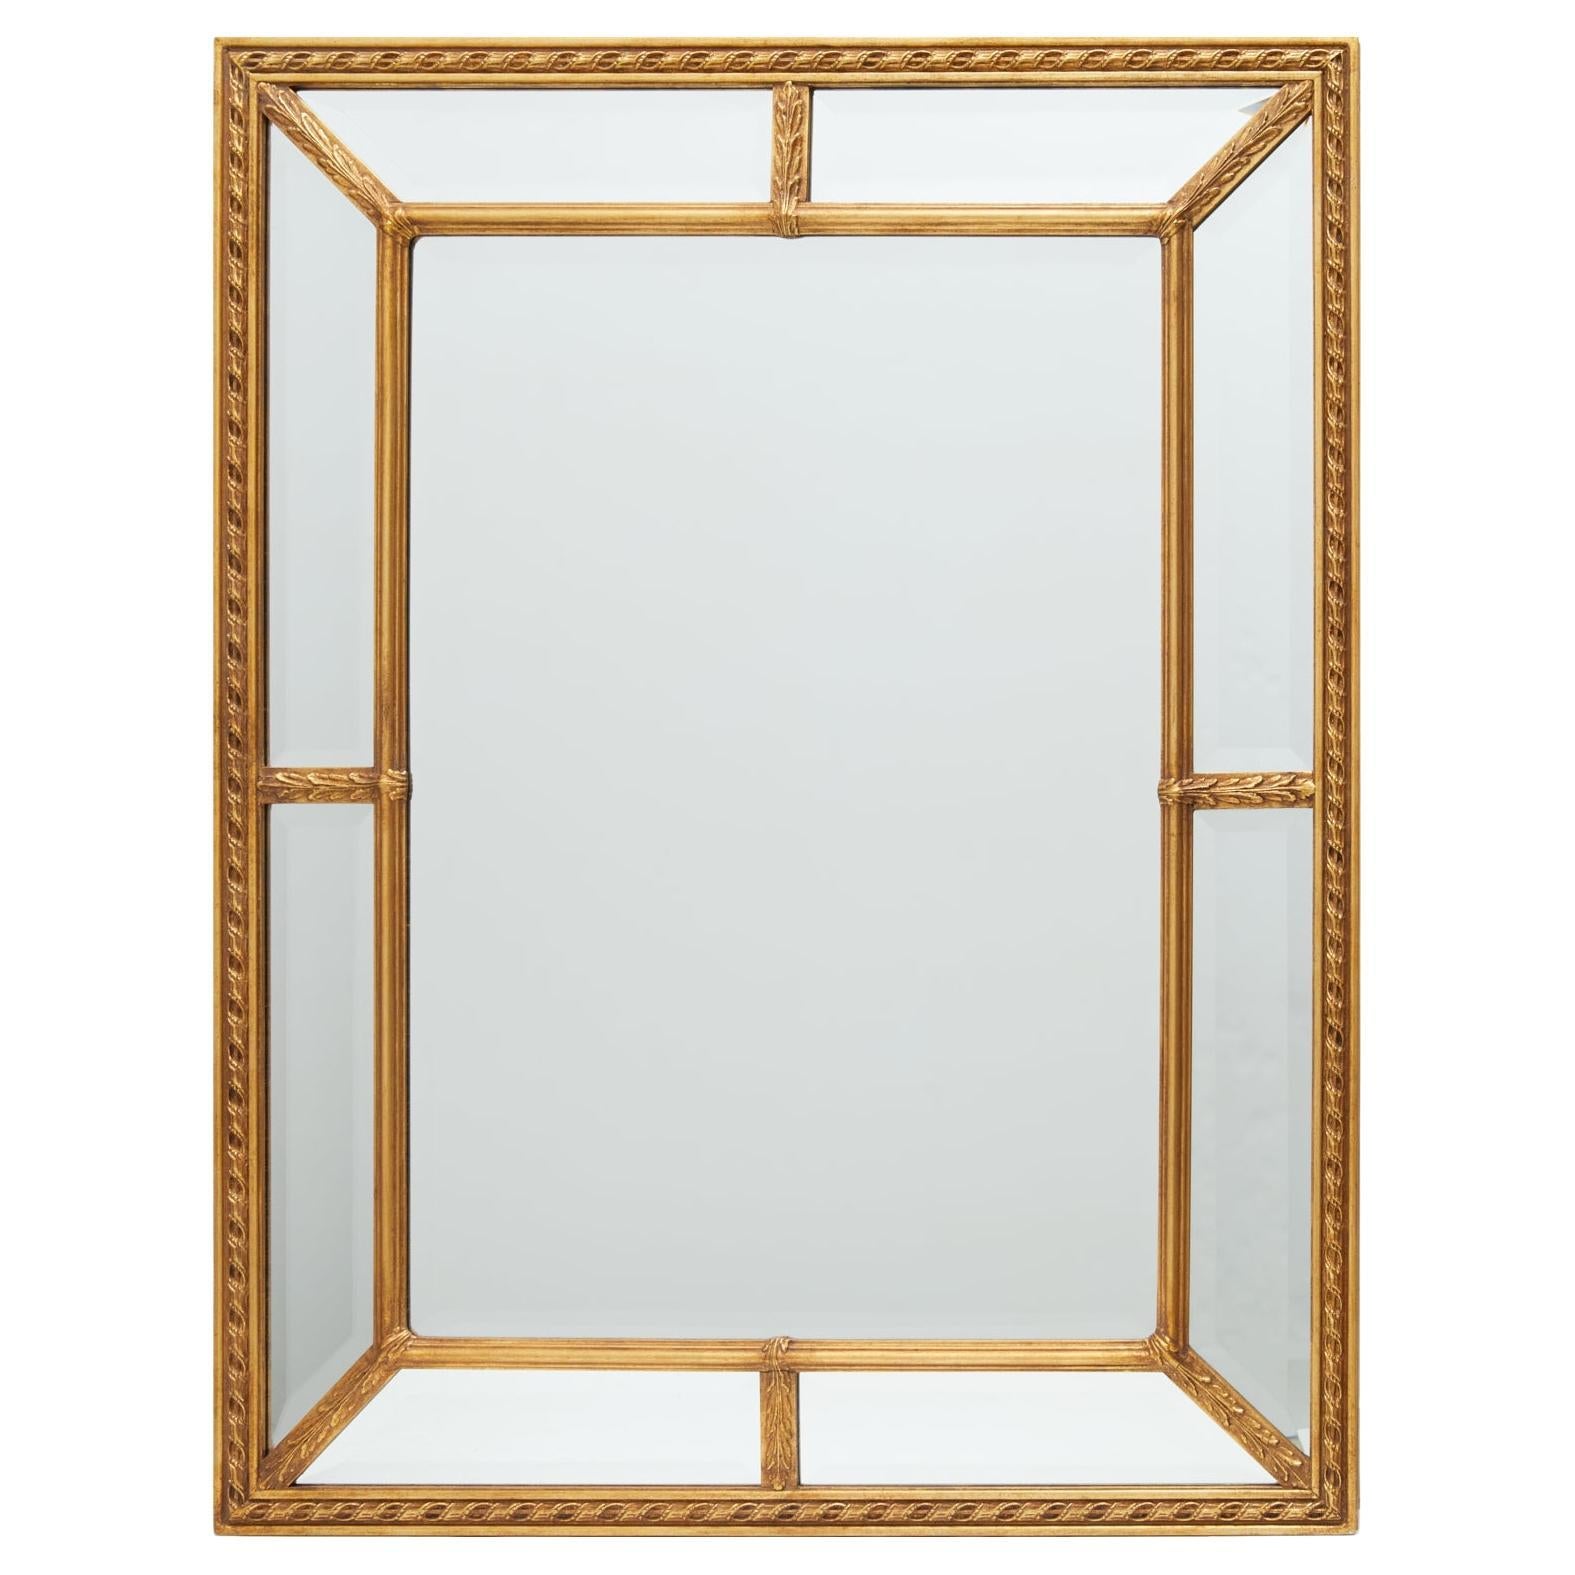 20th C. Carvers' Guild Regency Double Rectangle Mirror #1204 Antiqued Gold Leaf